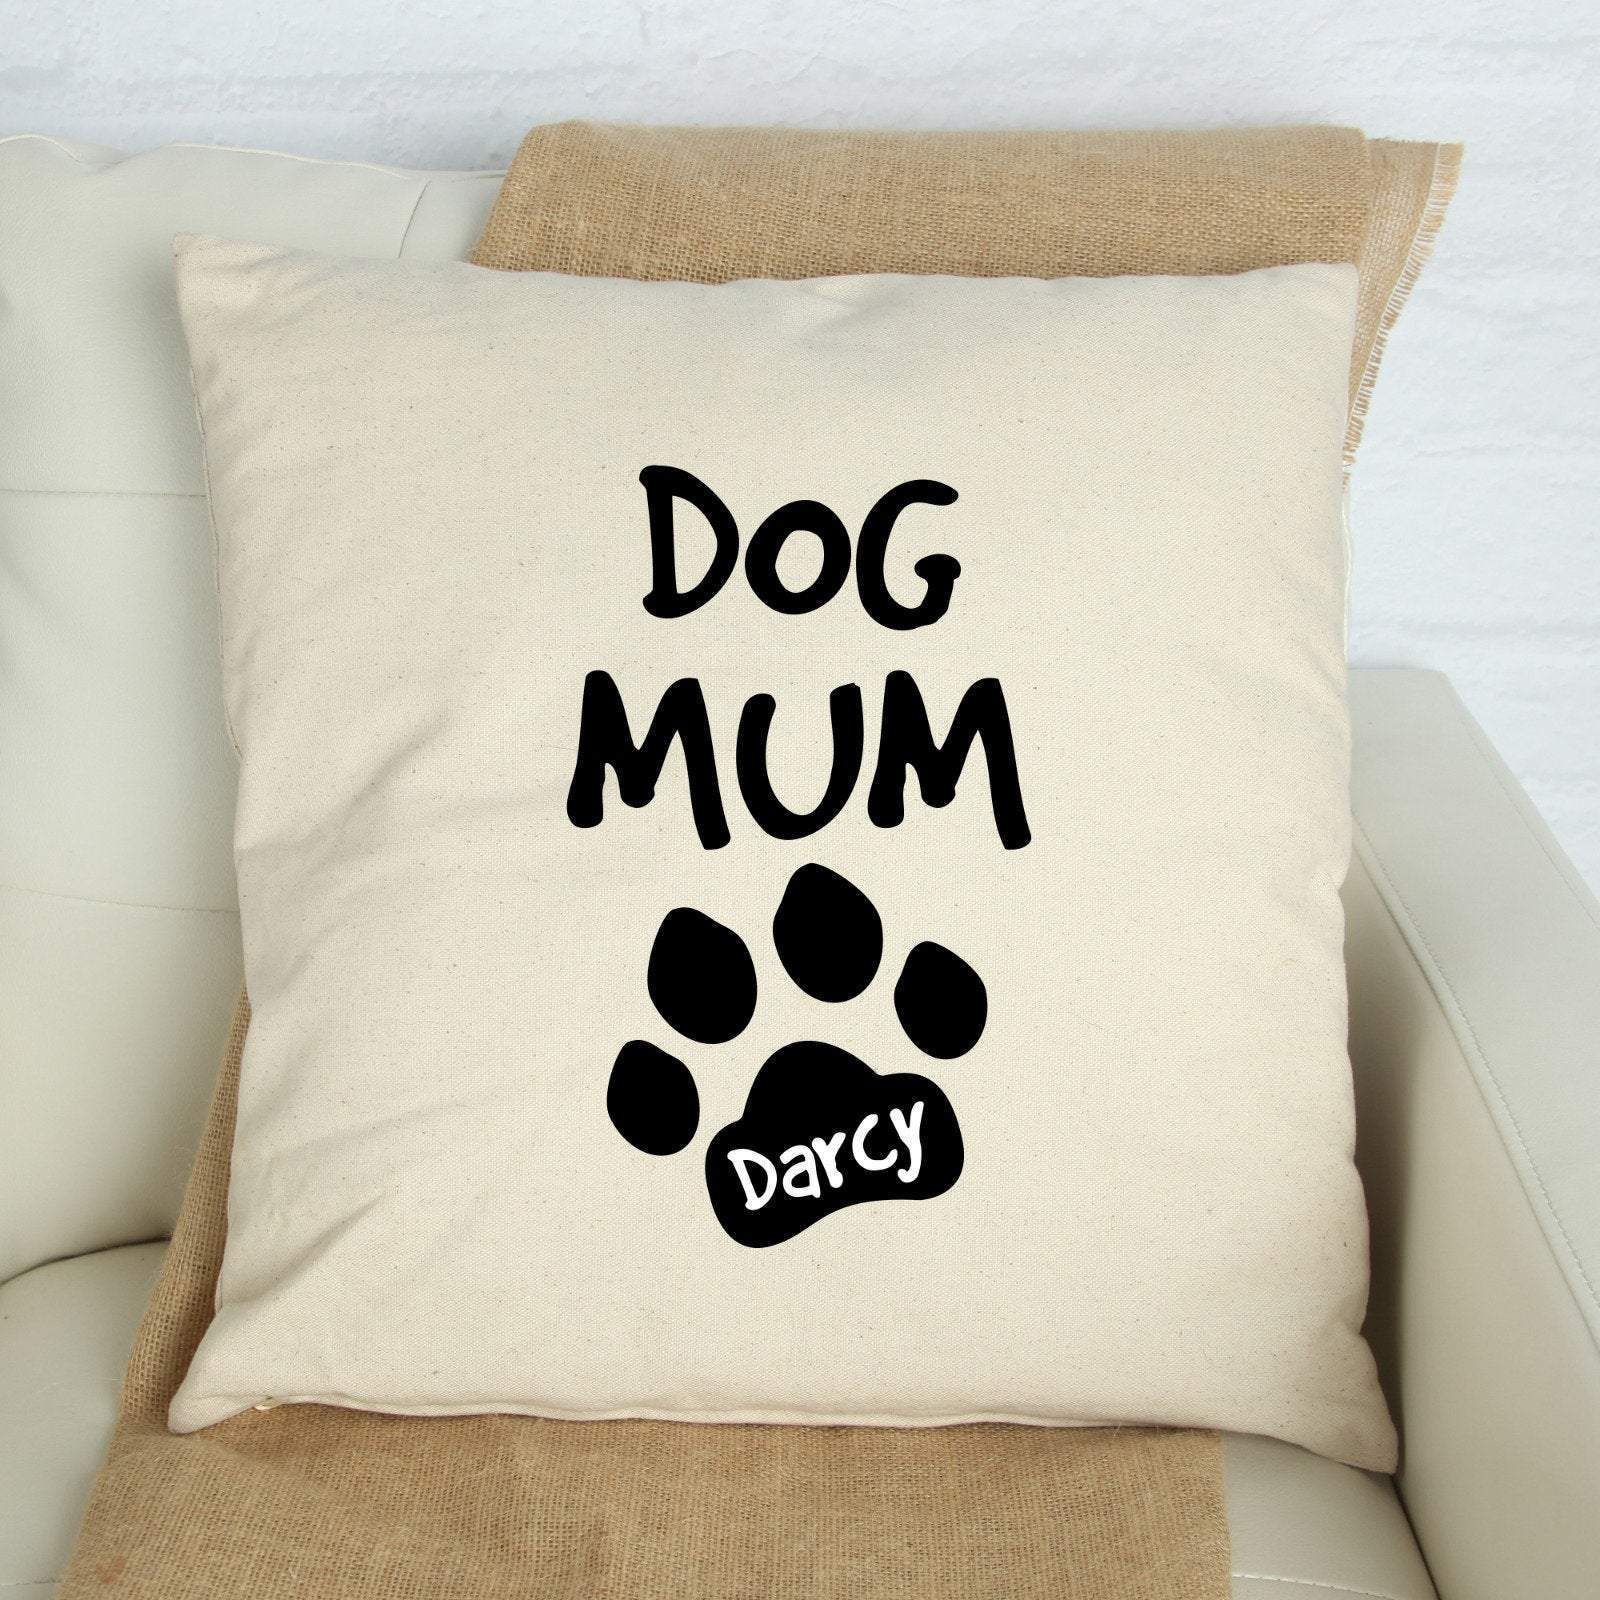 Dog mum cushion cover with dog name, Doglover birthday